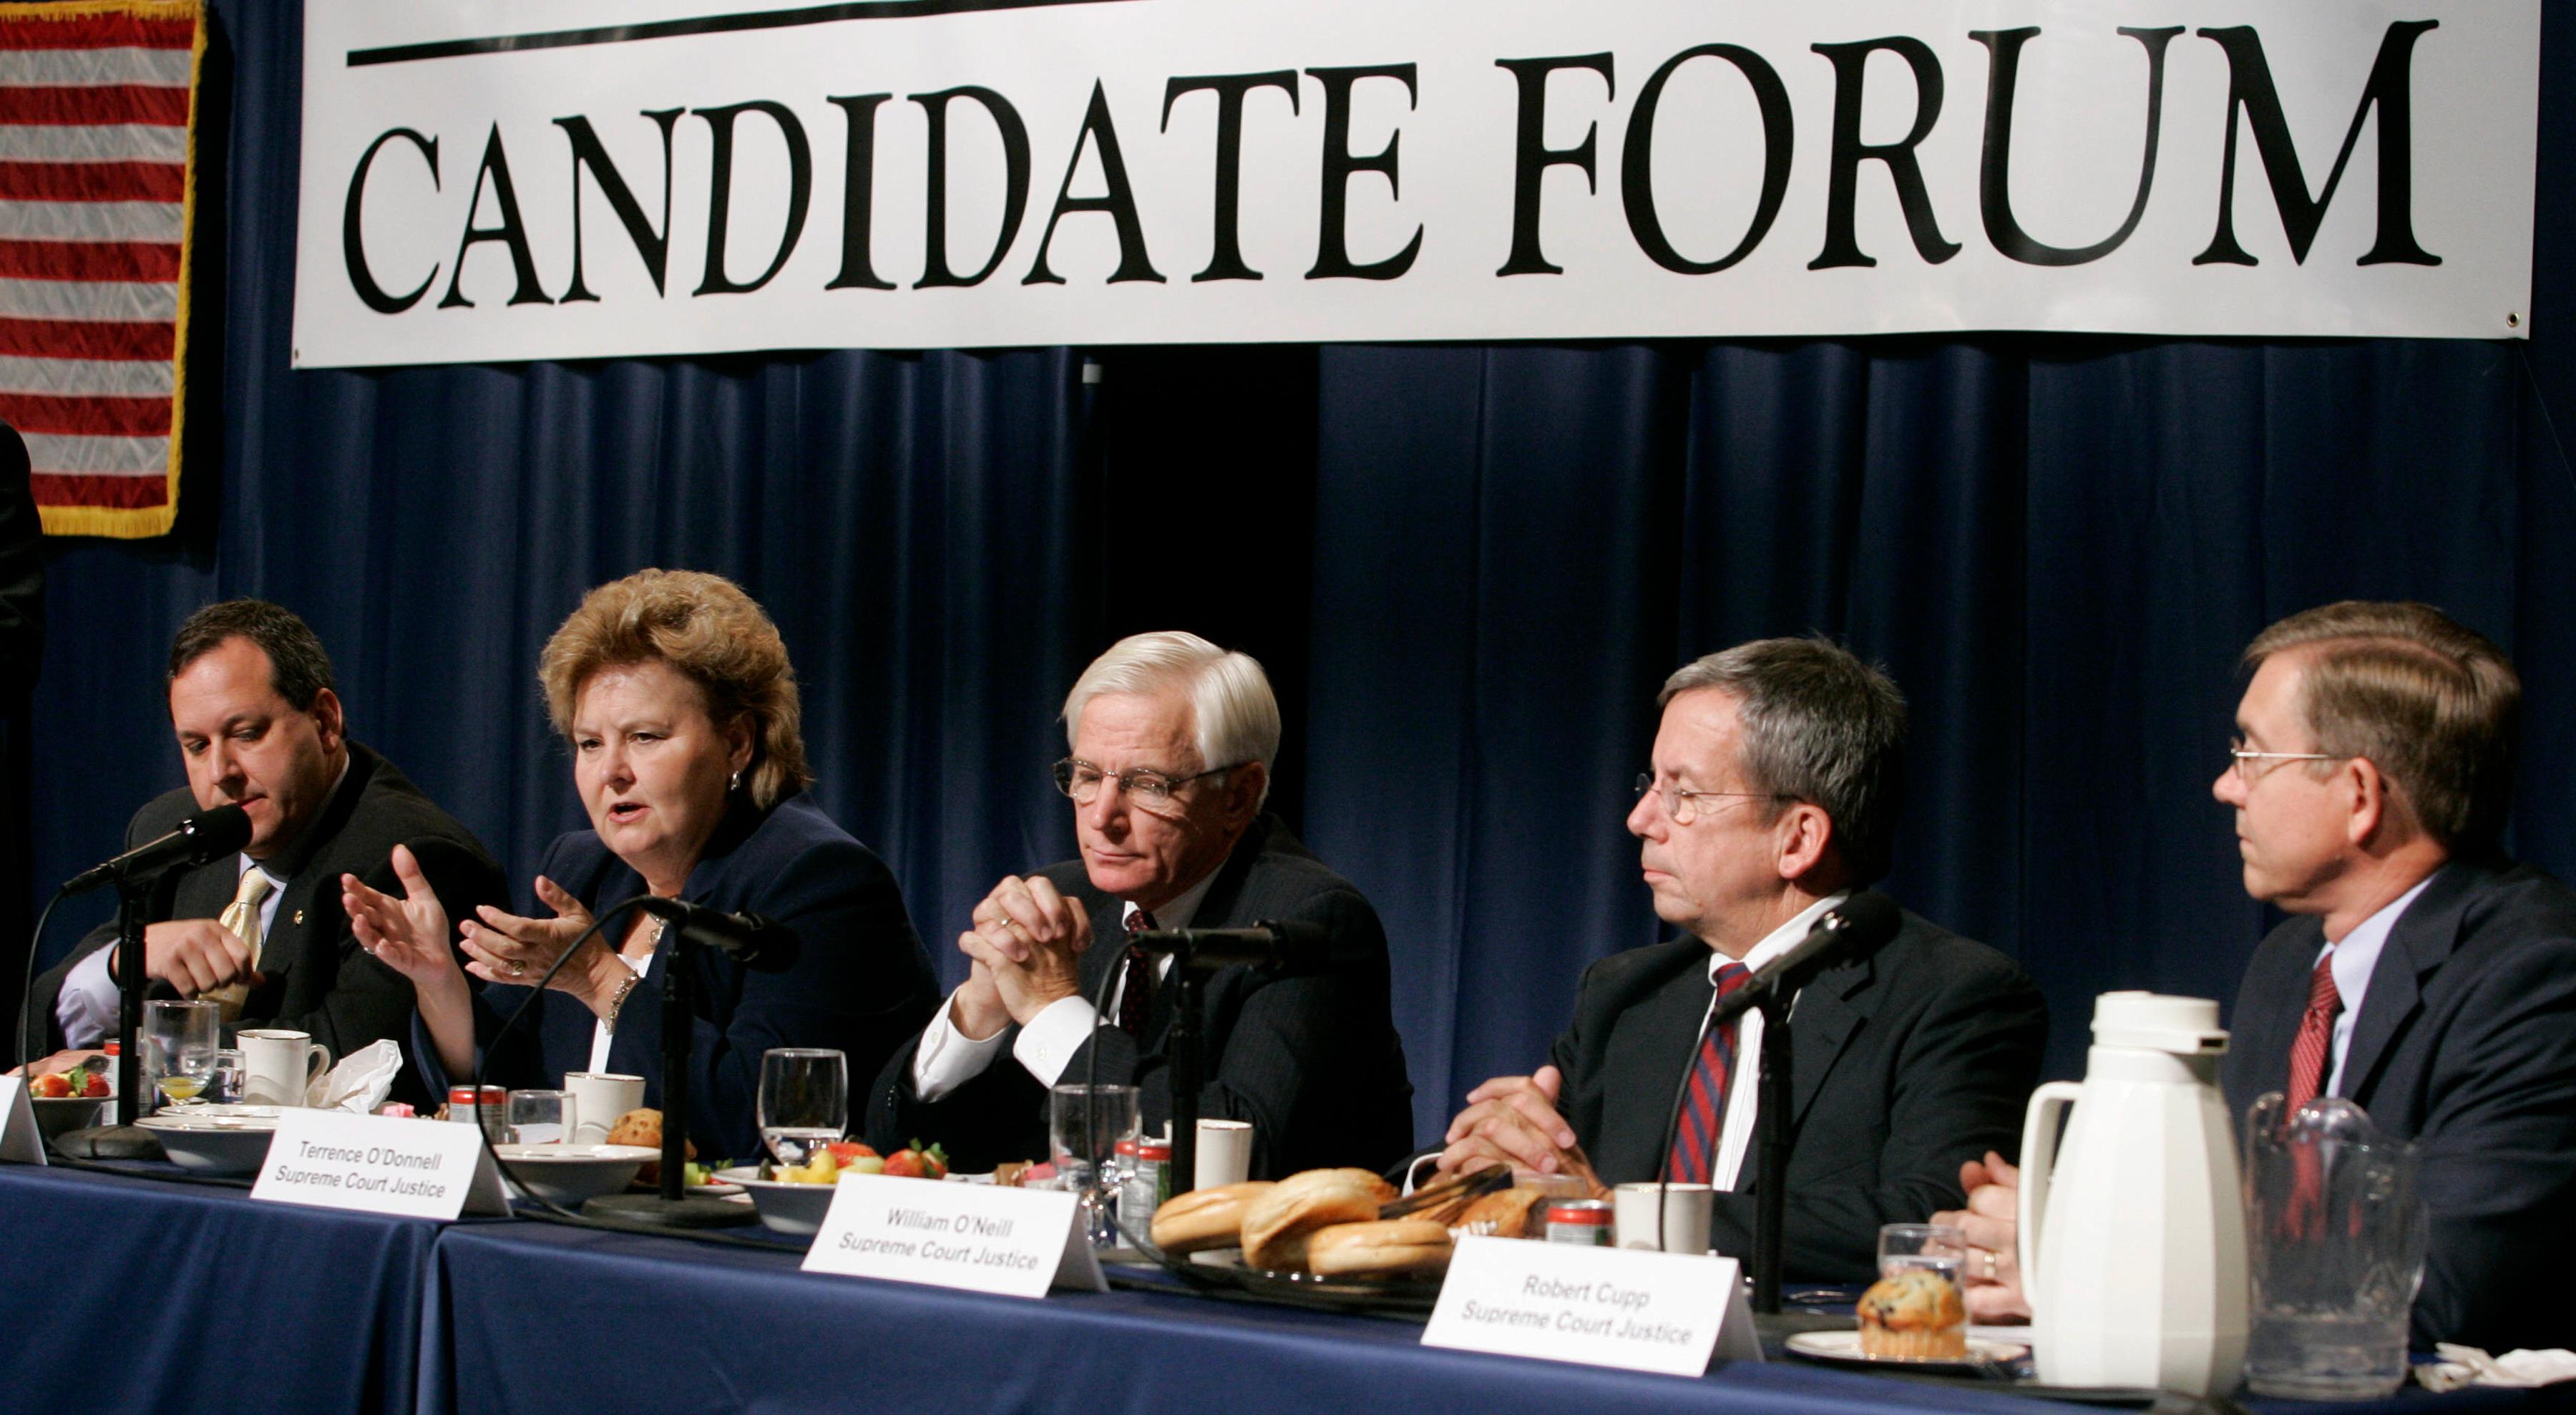 PHOTO-Montgomery-2006-10-6-candidate-forum-speaking-with-all-men-MERLIN-3641024